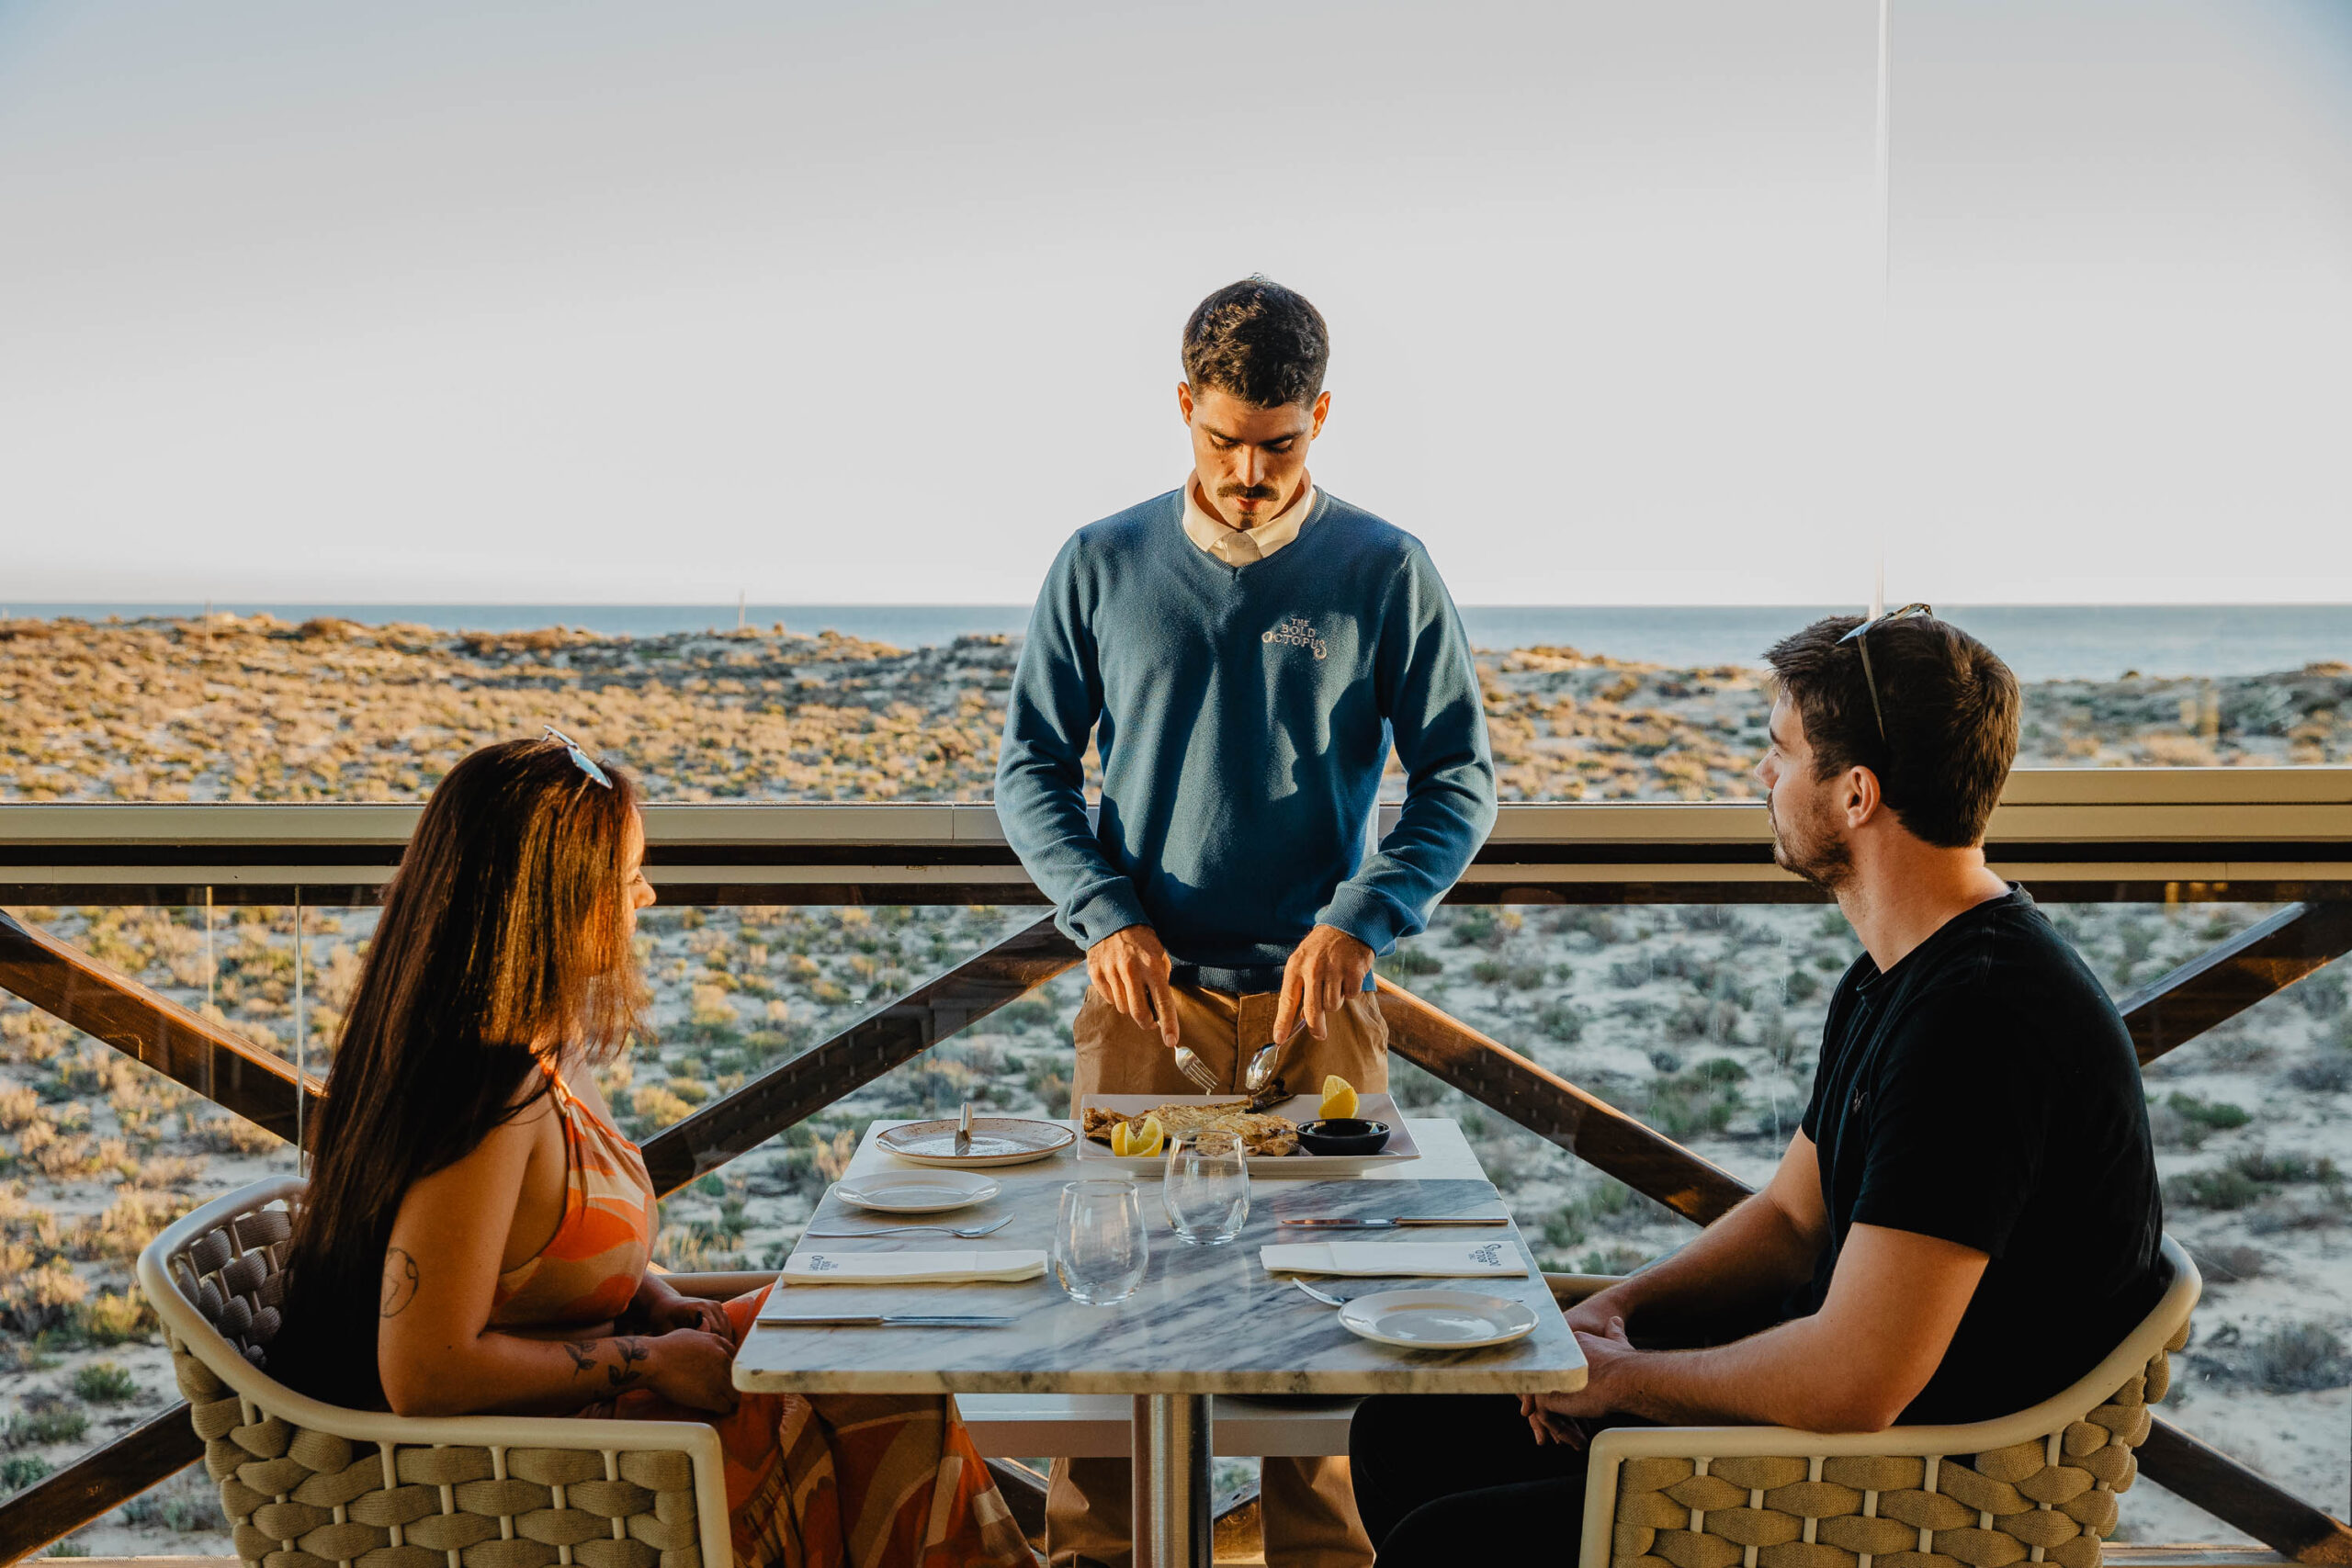 Beach Restaurant & rooftop bar, seafood & cocktails, Algarve Portugal